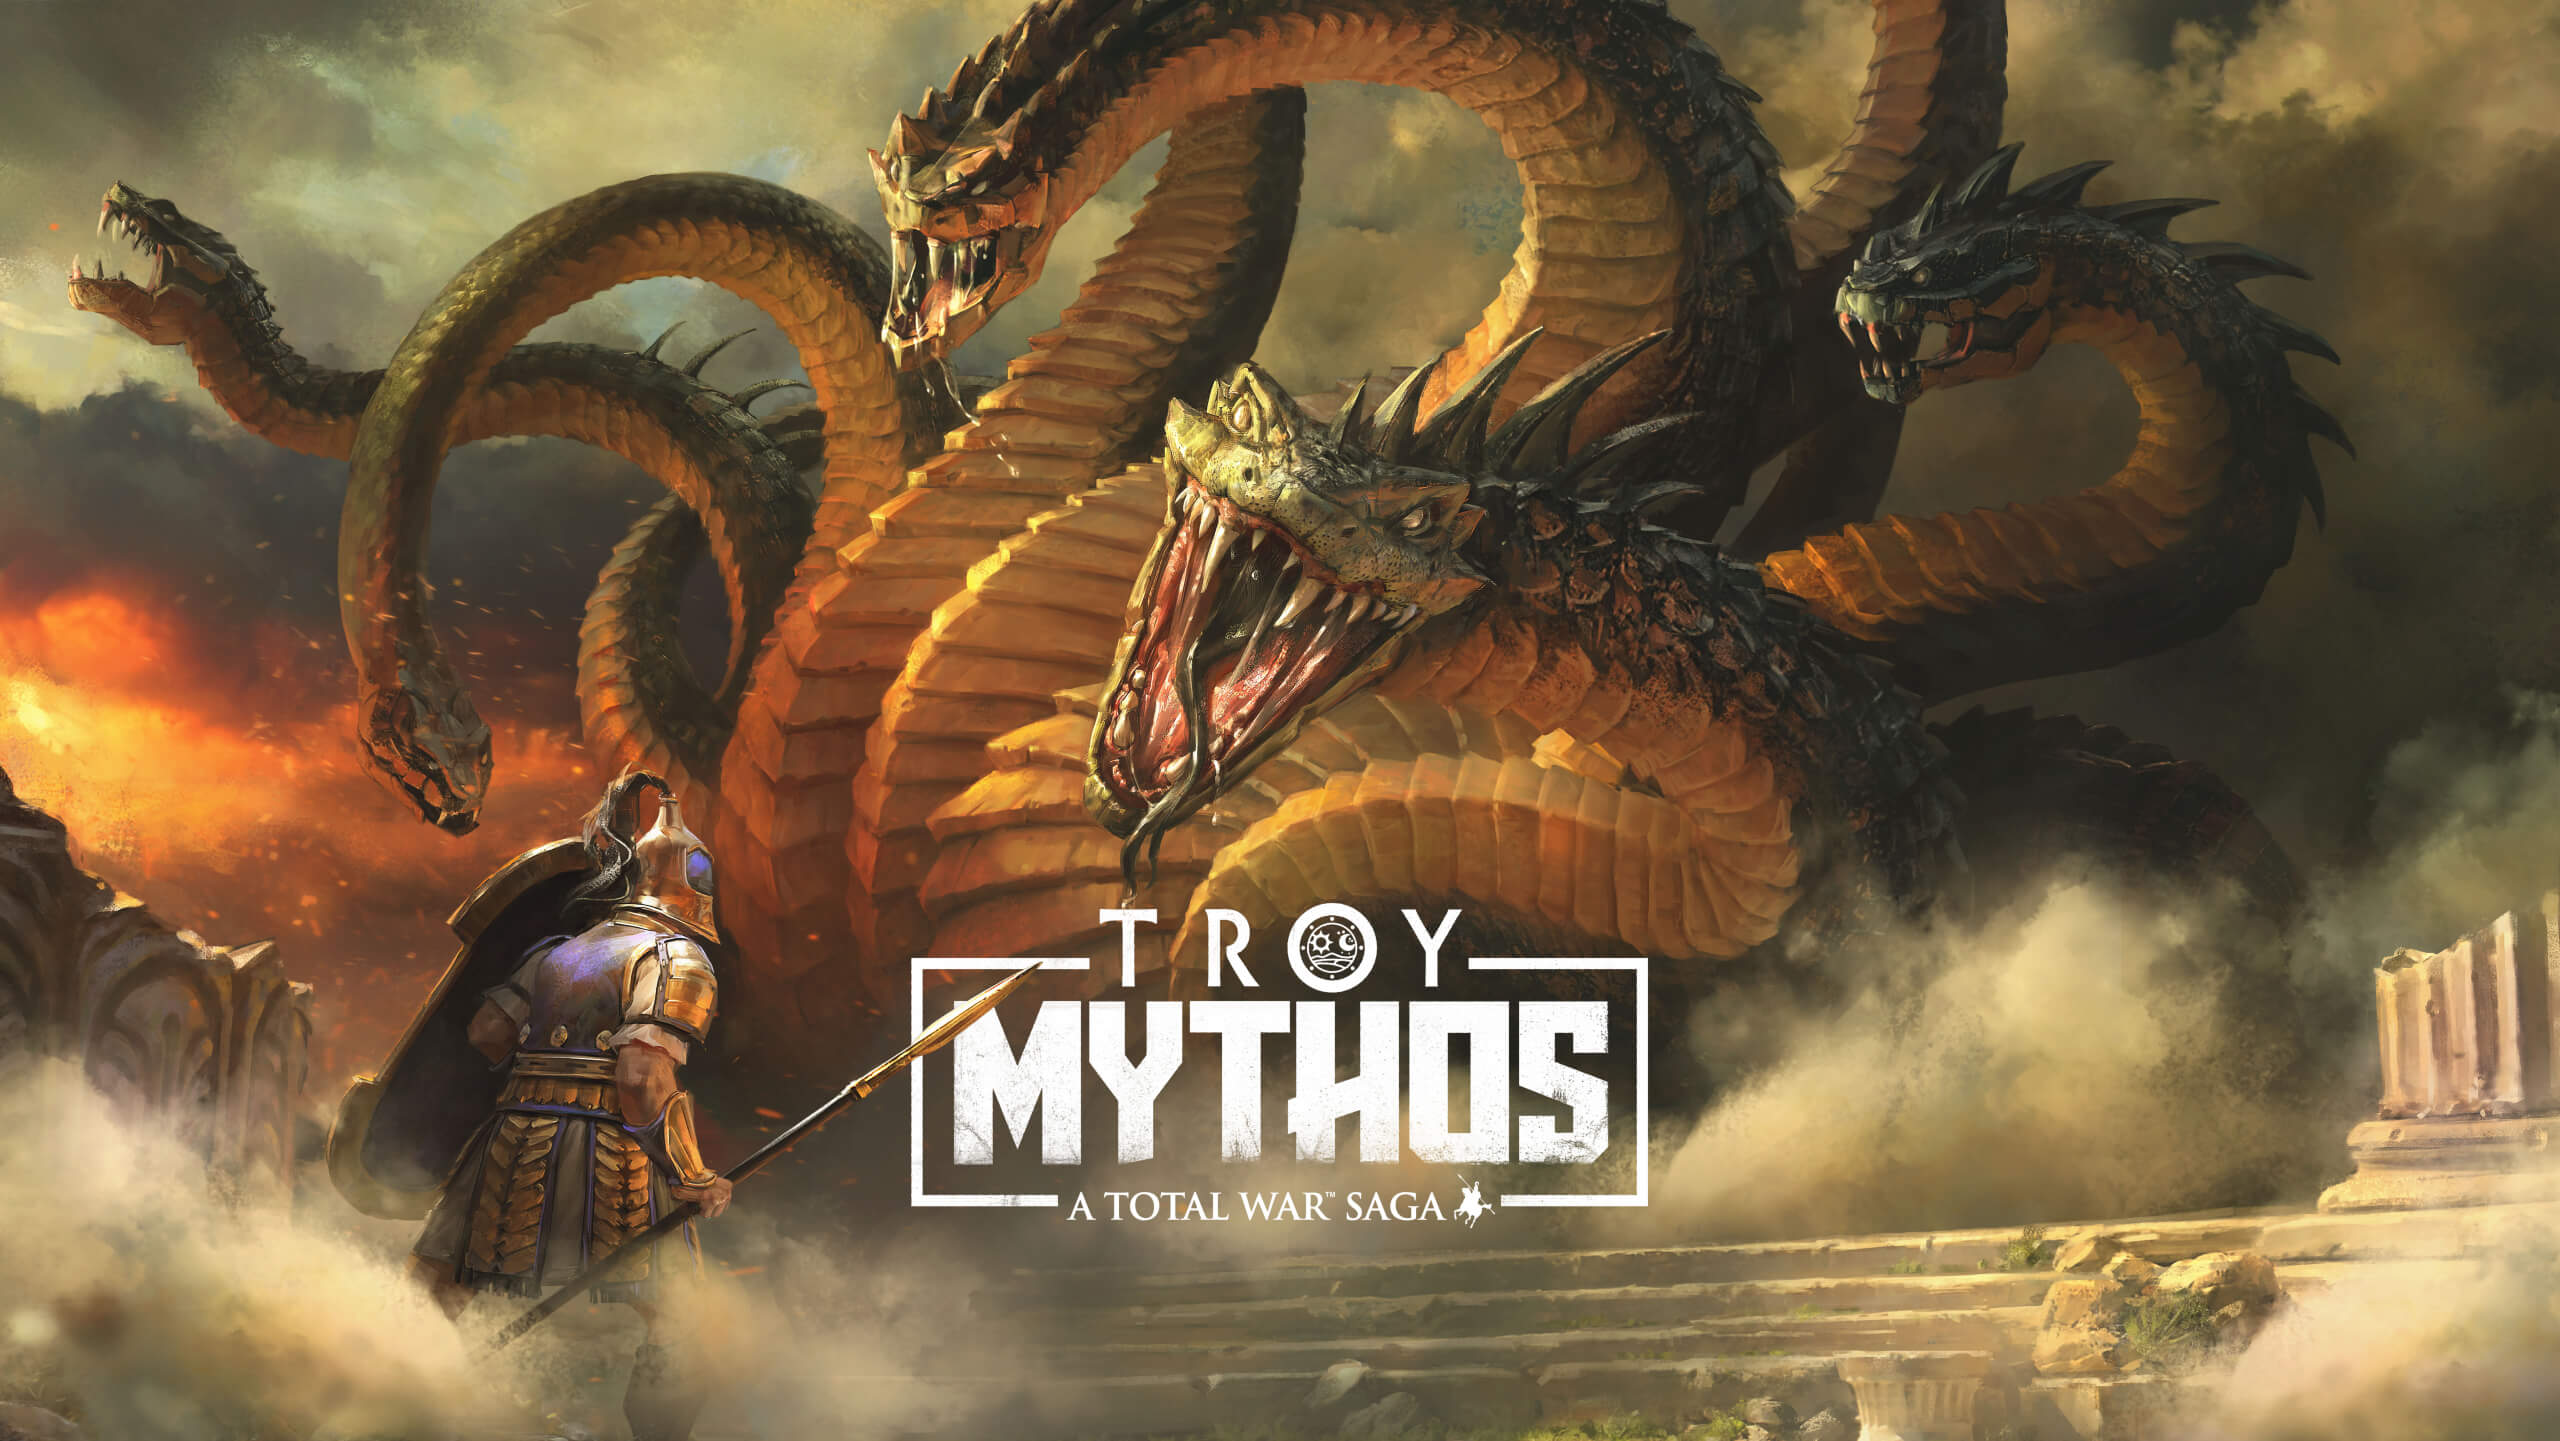 Total War Saga: Troy Mythos